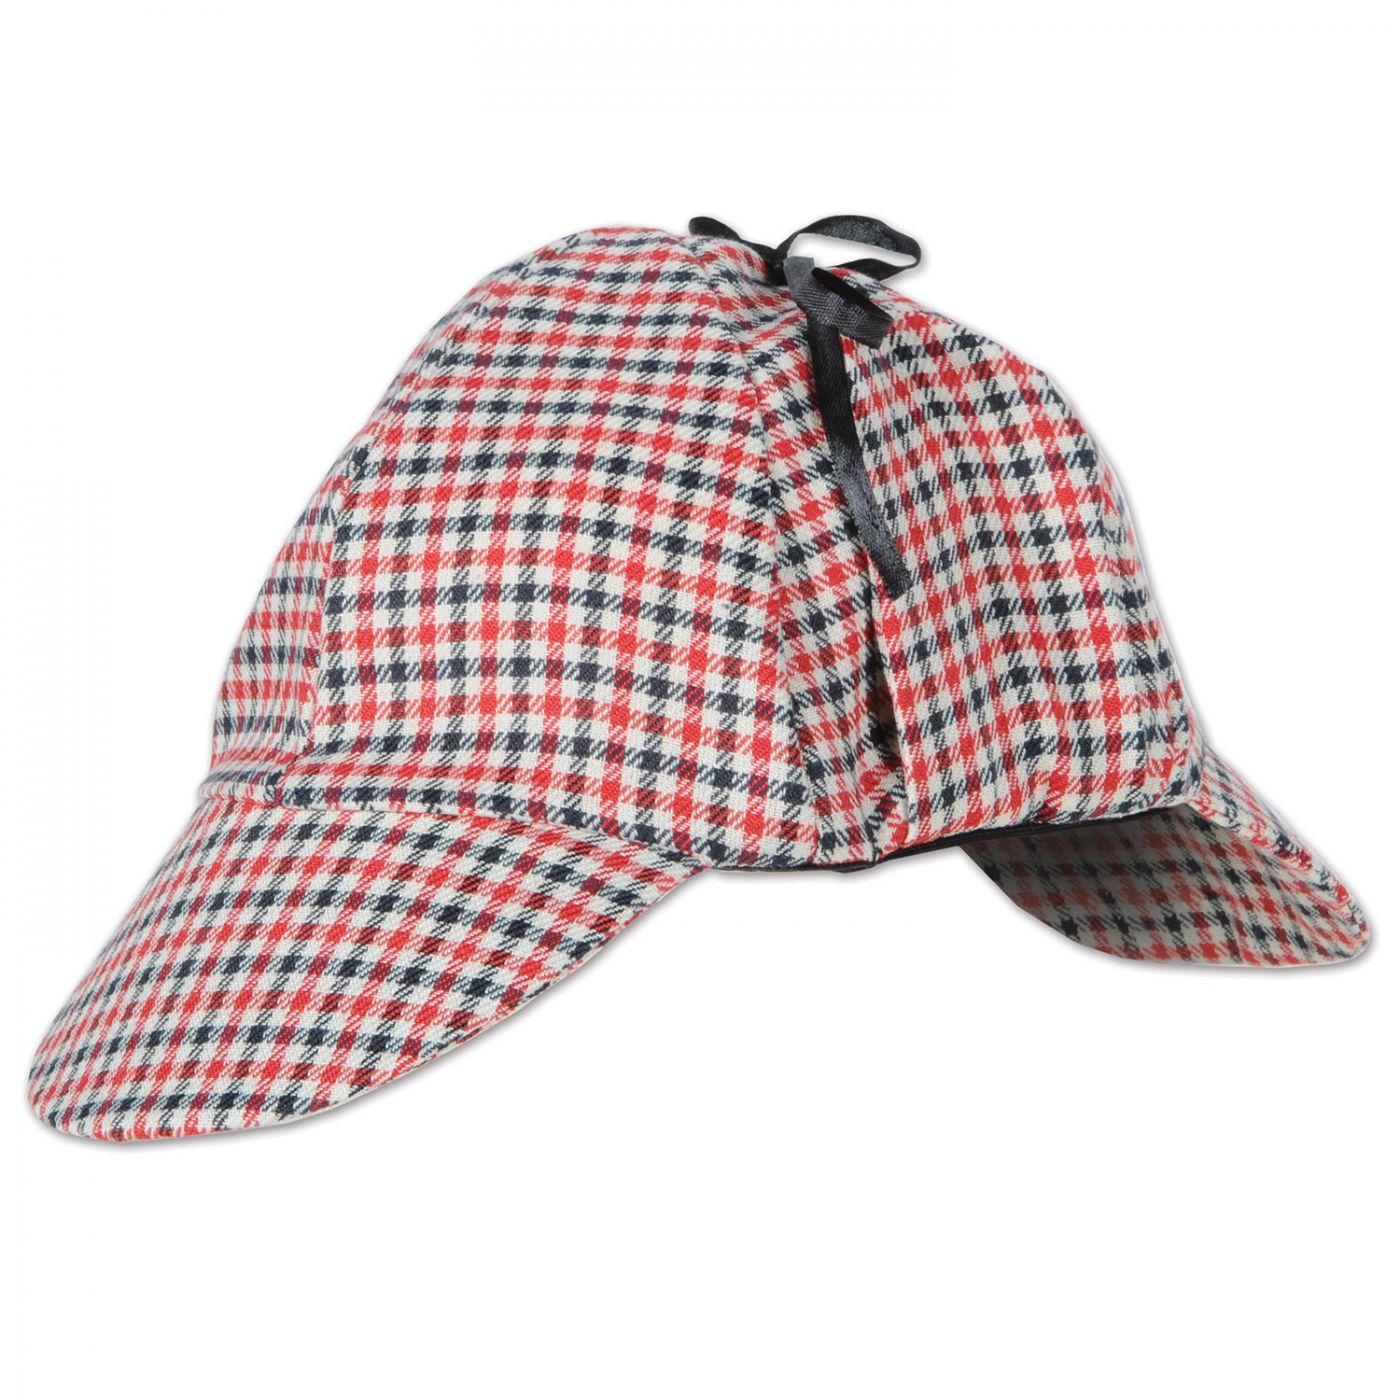 Deerstalker Hat (12) image